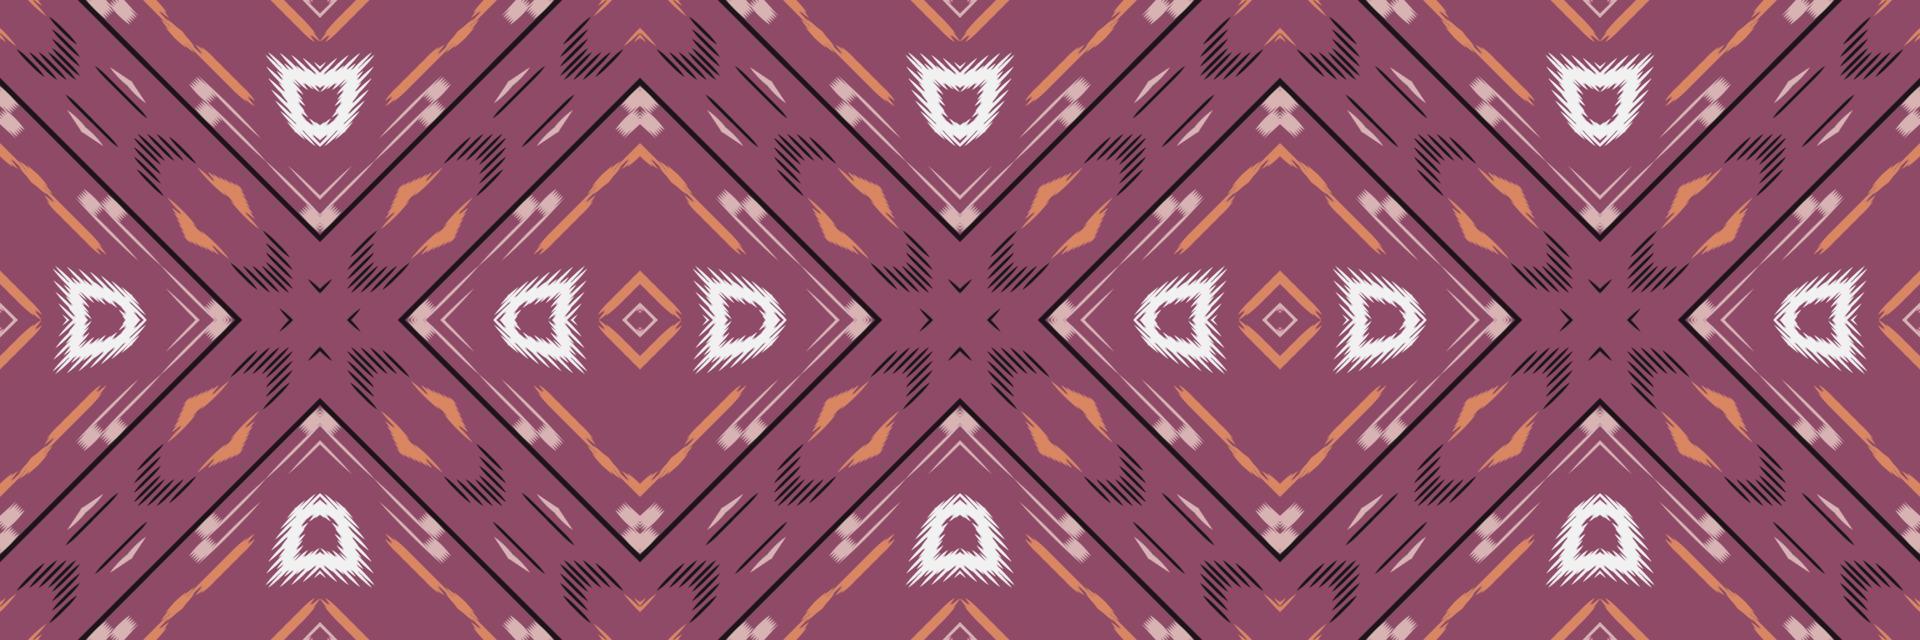 Ikat damask batik textile seamless pattern digital vector design for Print saree Kurti Borneo Fabric border brush symbols swatches stylish